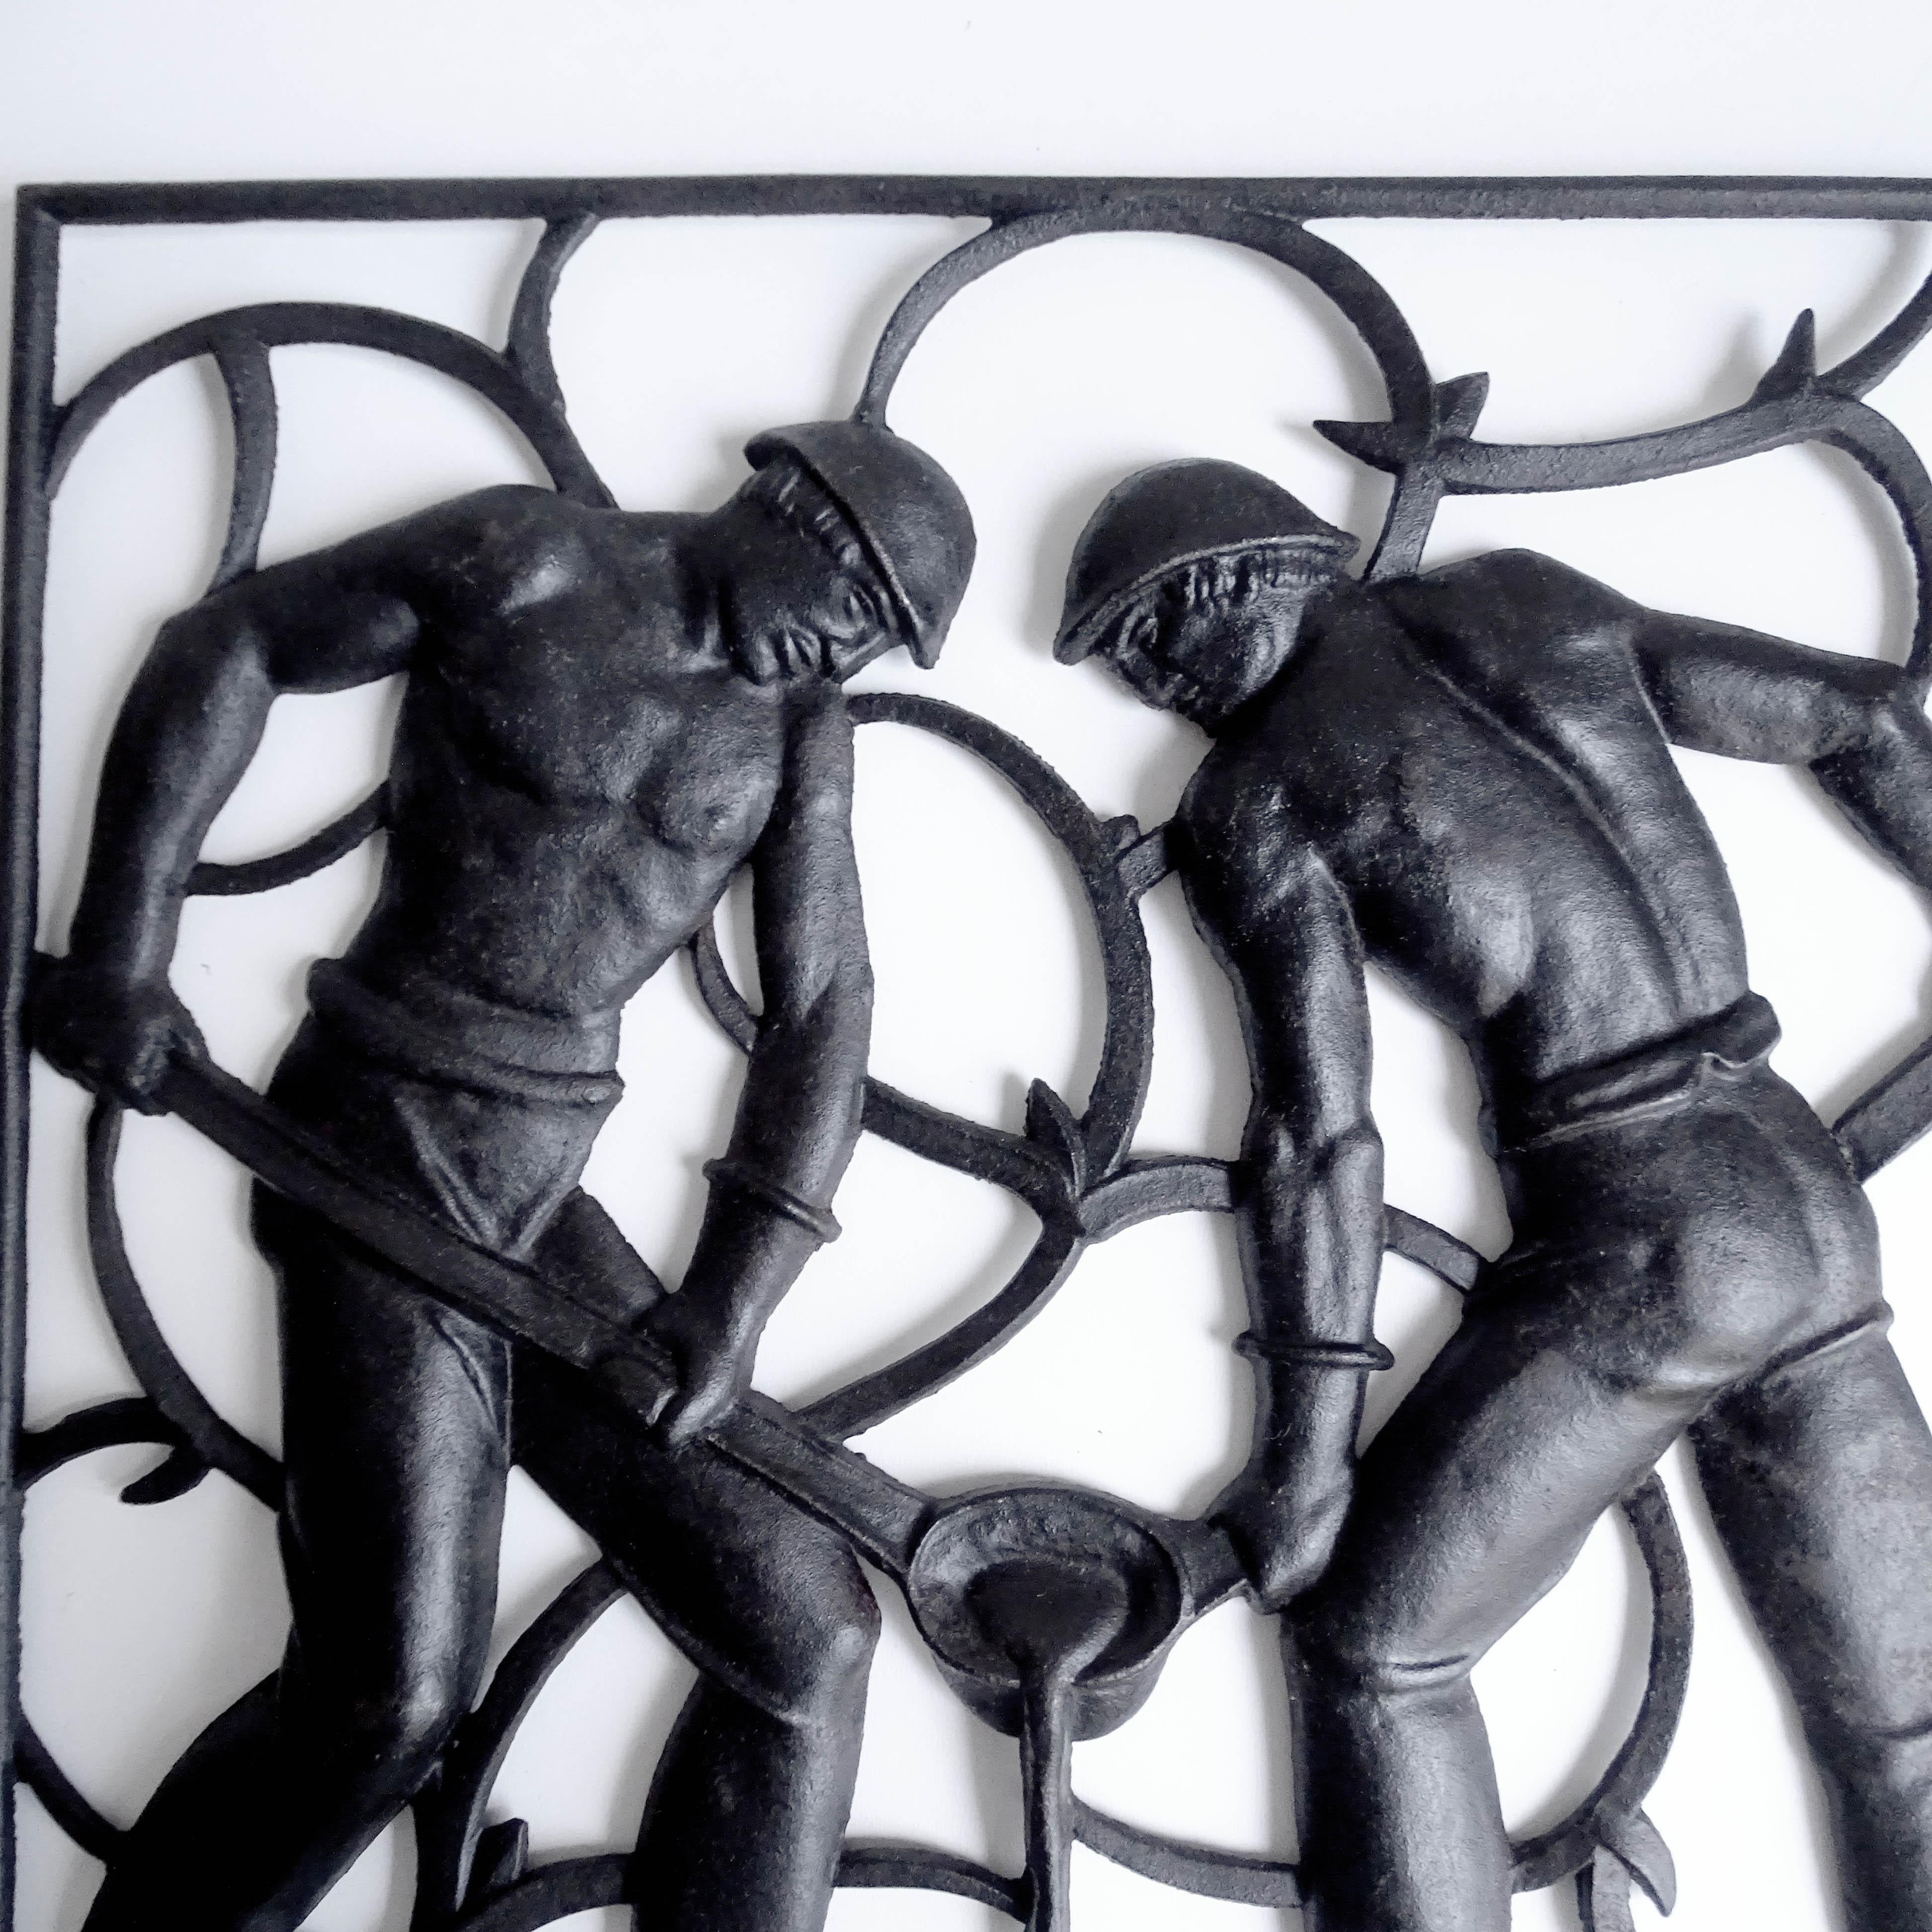 European Art Deco Wall Sculpture Miner Nude Men Cast Iron , 1930s Modernist Design